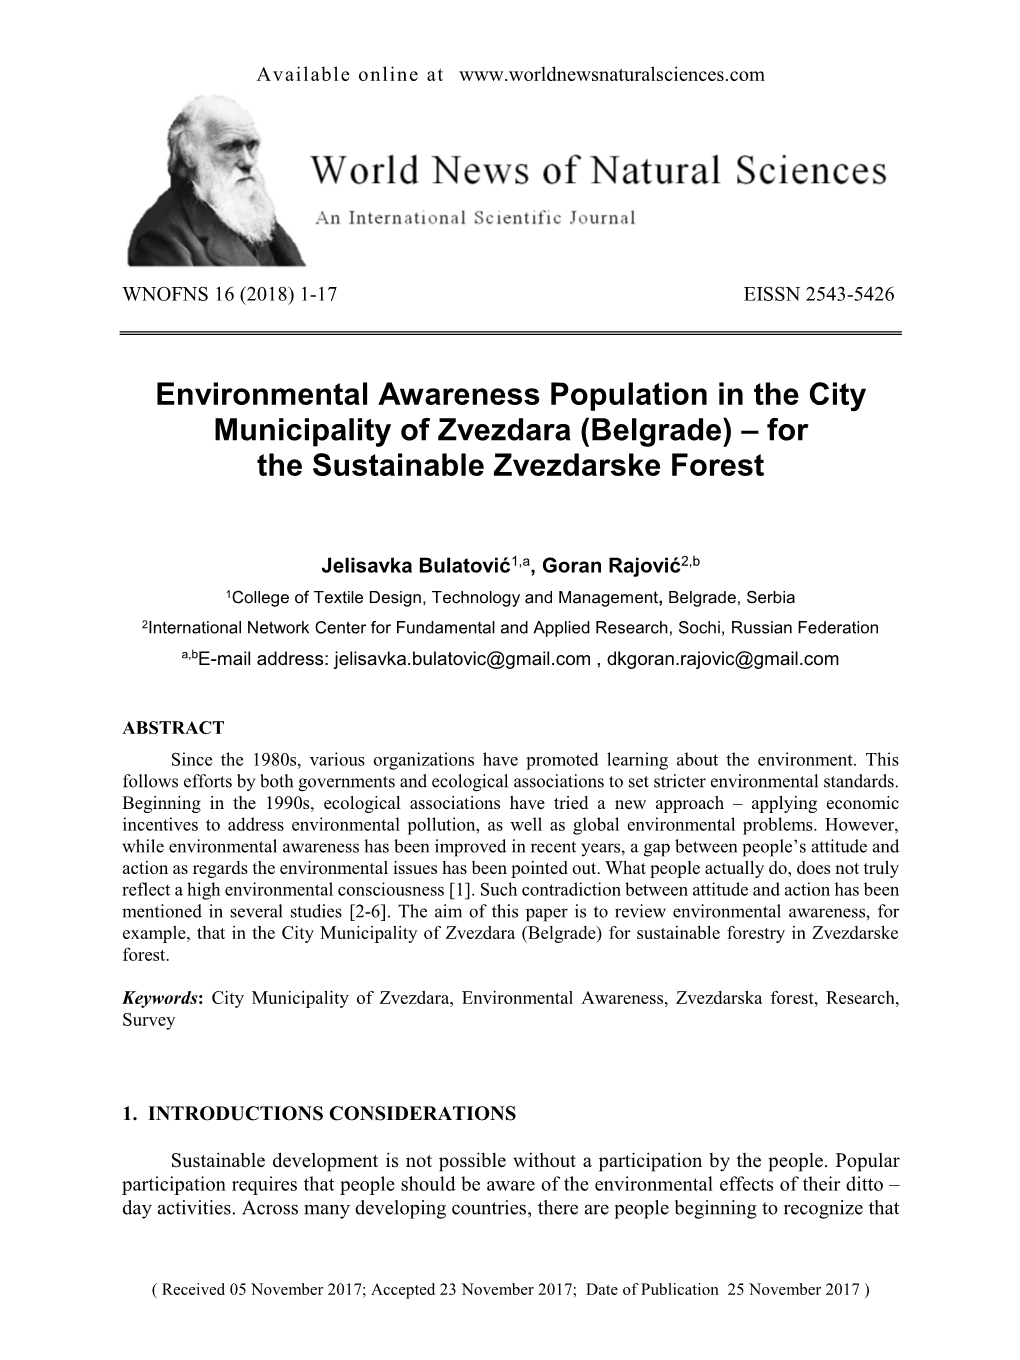 Environmental Awareness Population in City Municipality of Zvezdara